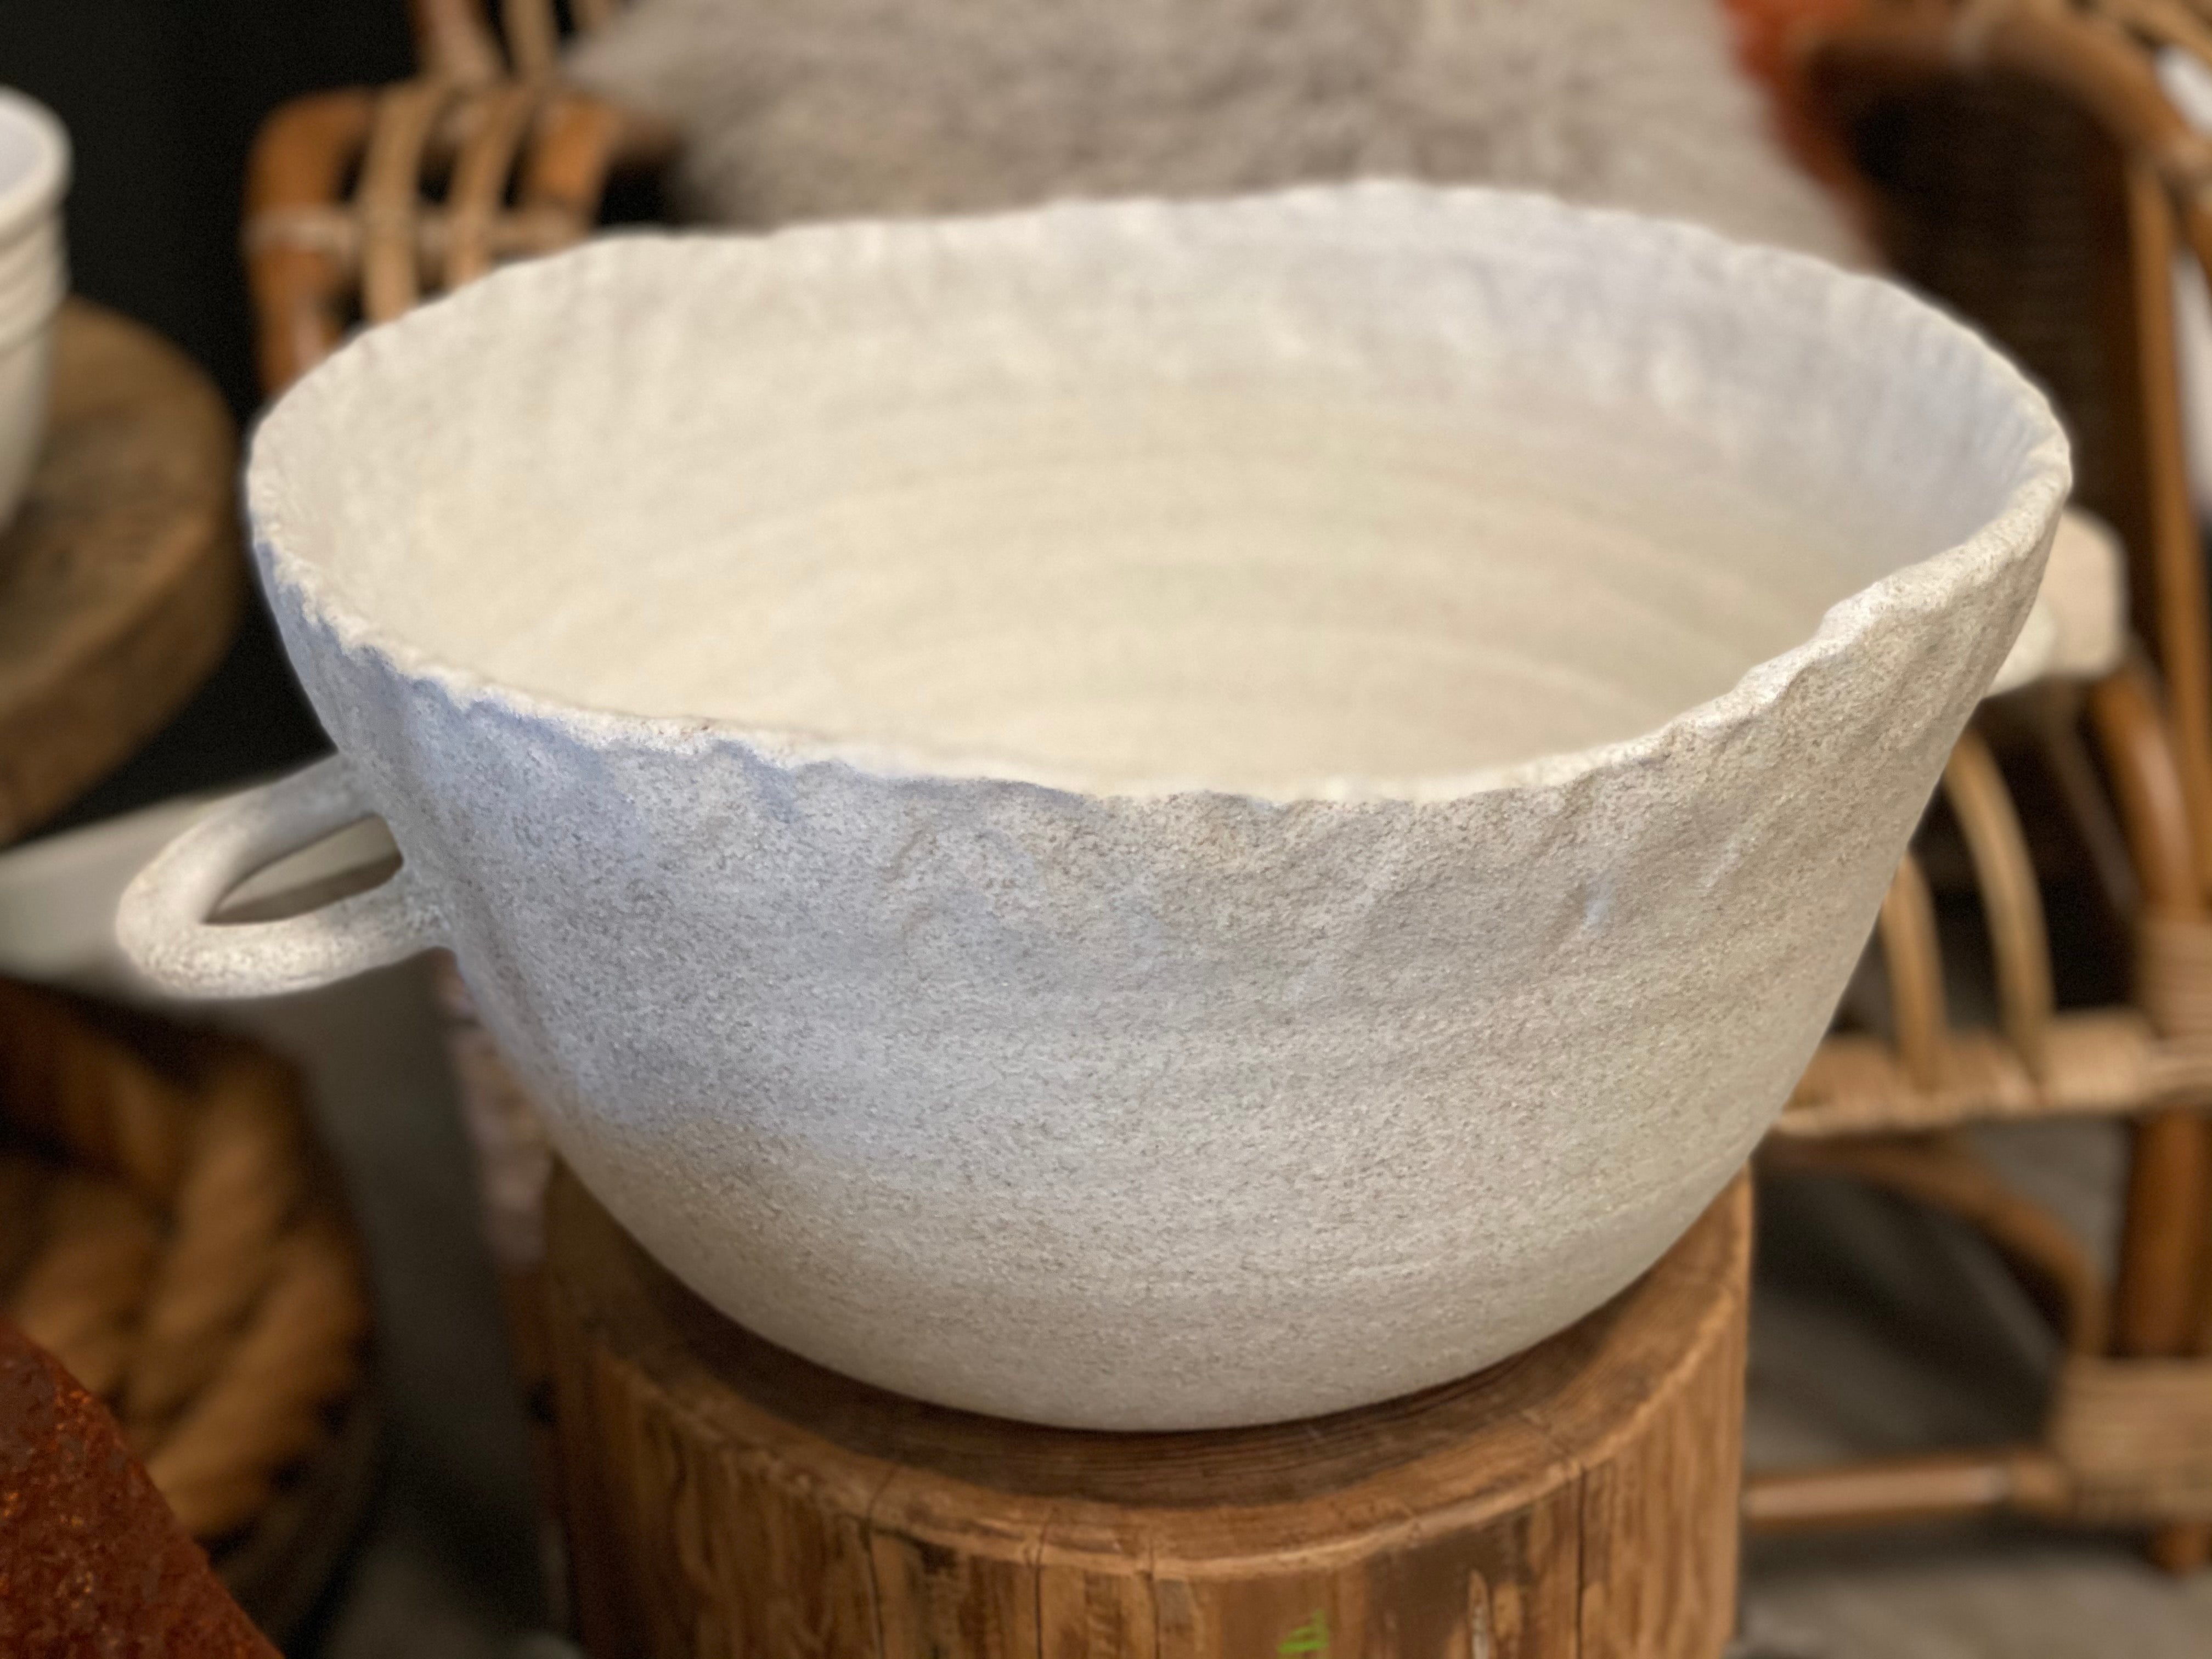 BEAUTIFUL handmade bowl with handles